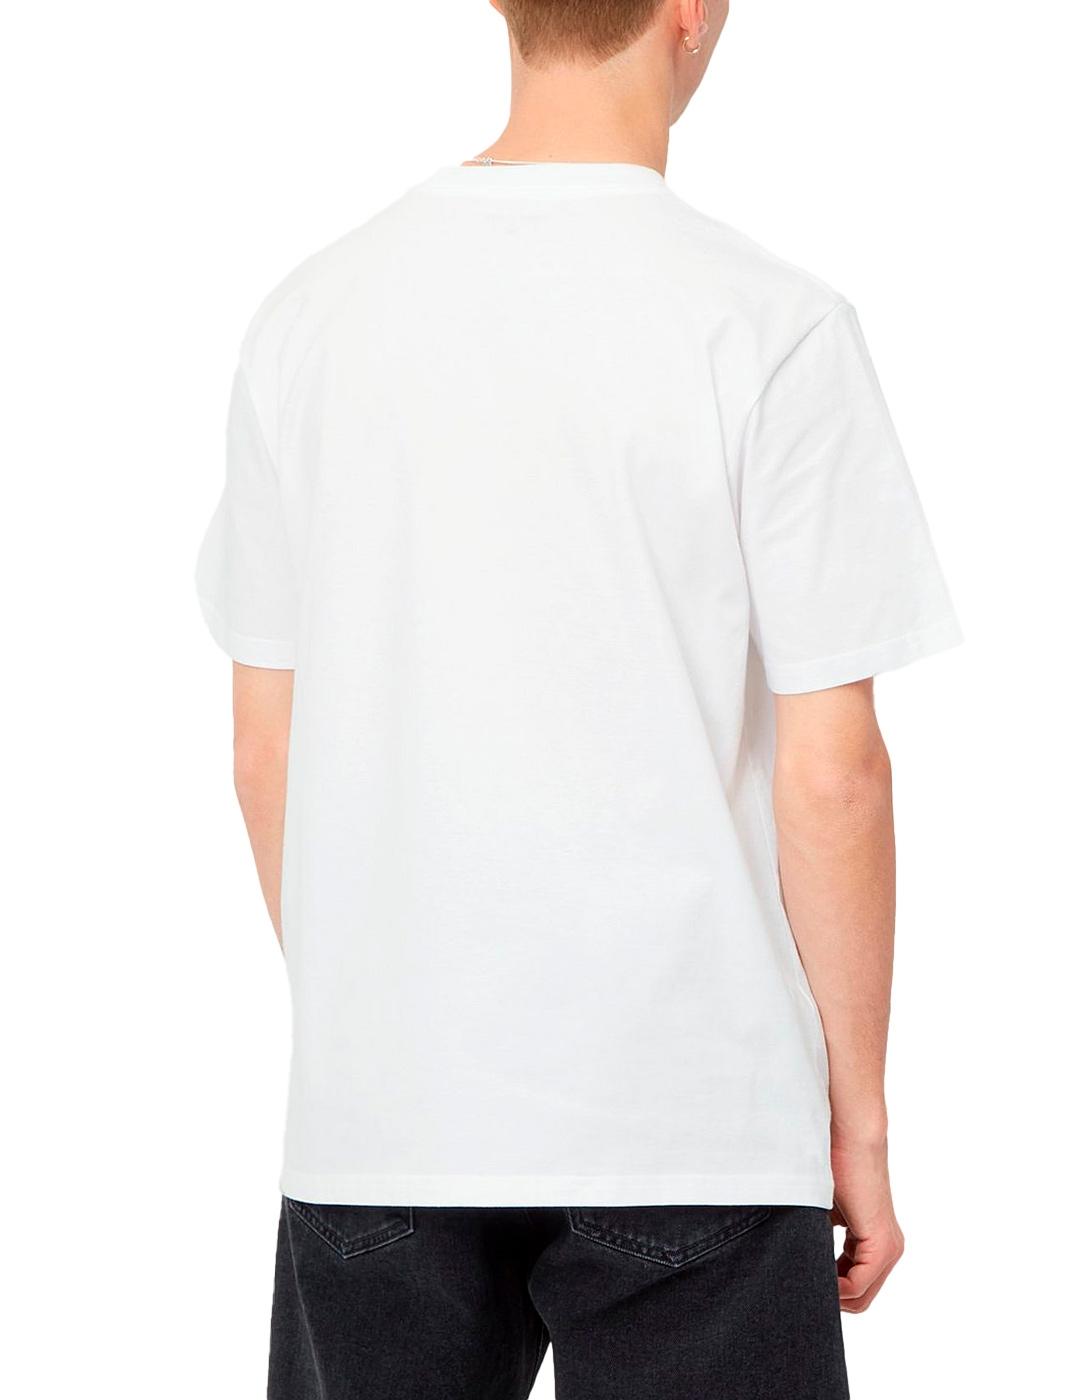 Camiseta Carhartt Painter Blanco